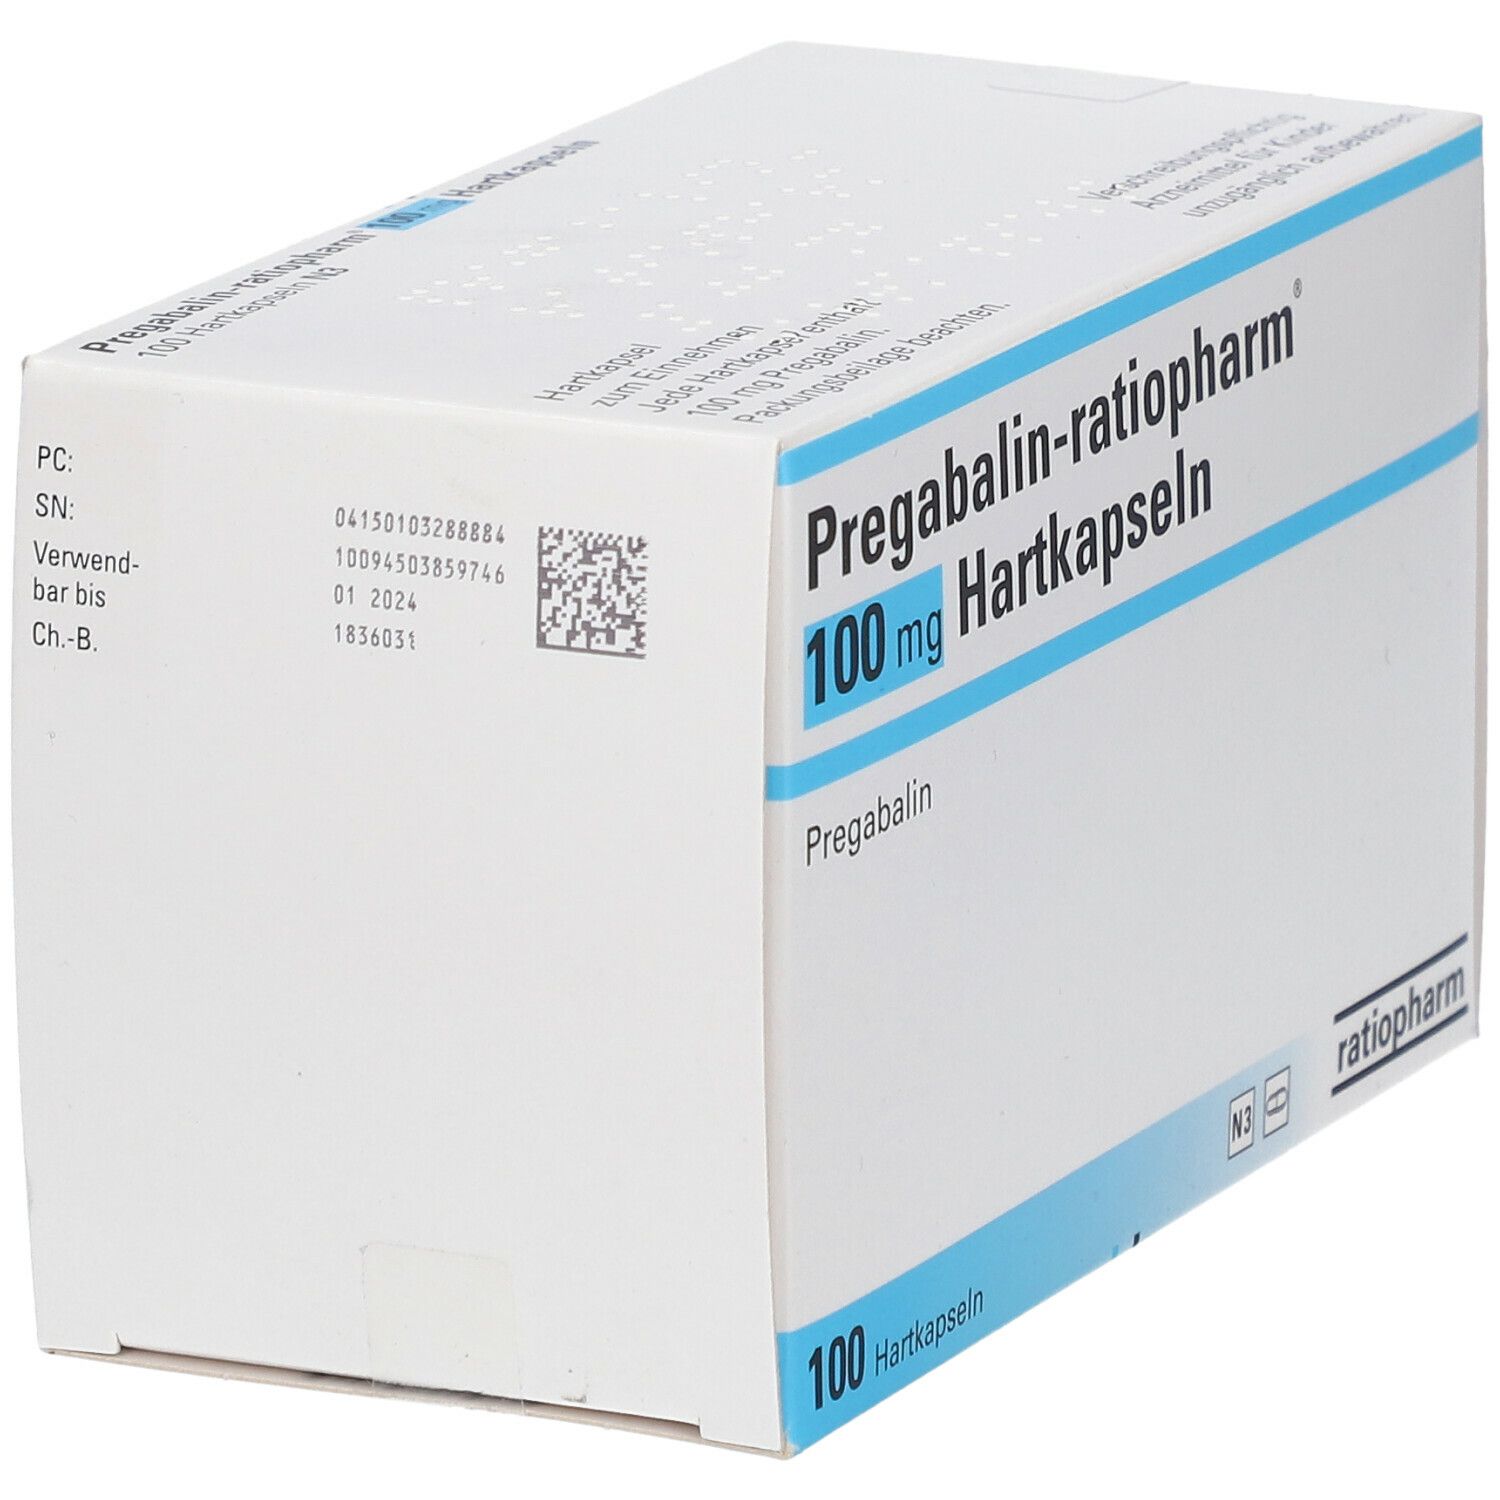 Pregabalin-ratiopharm® 100 mg